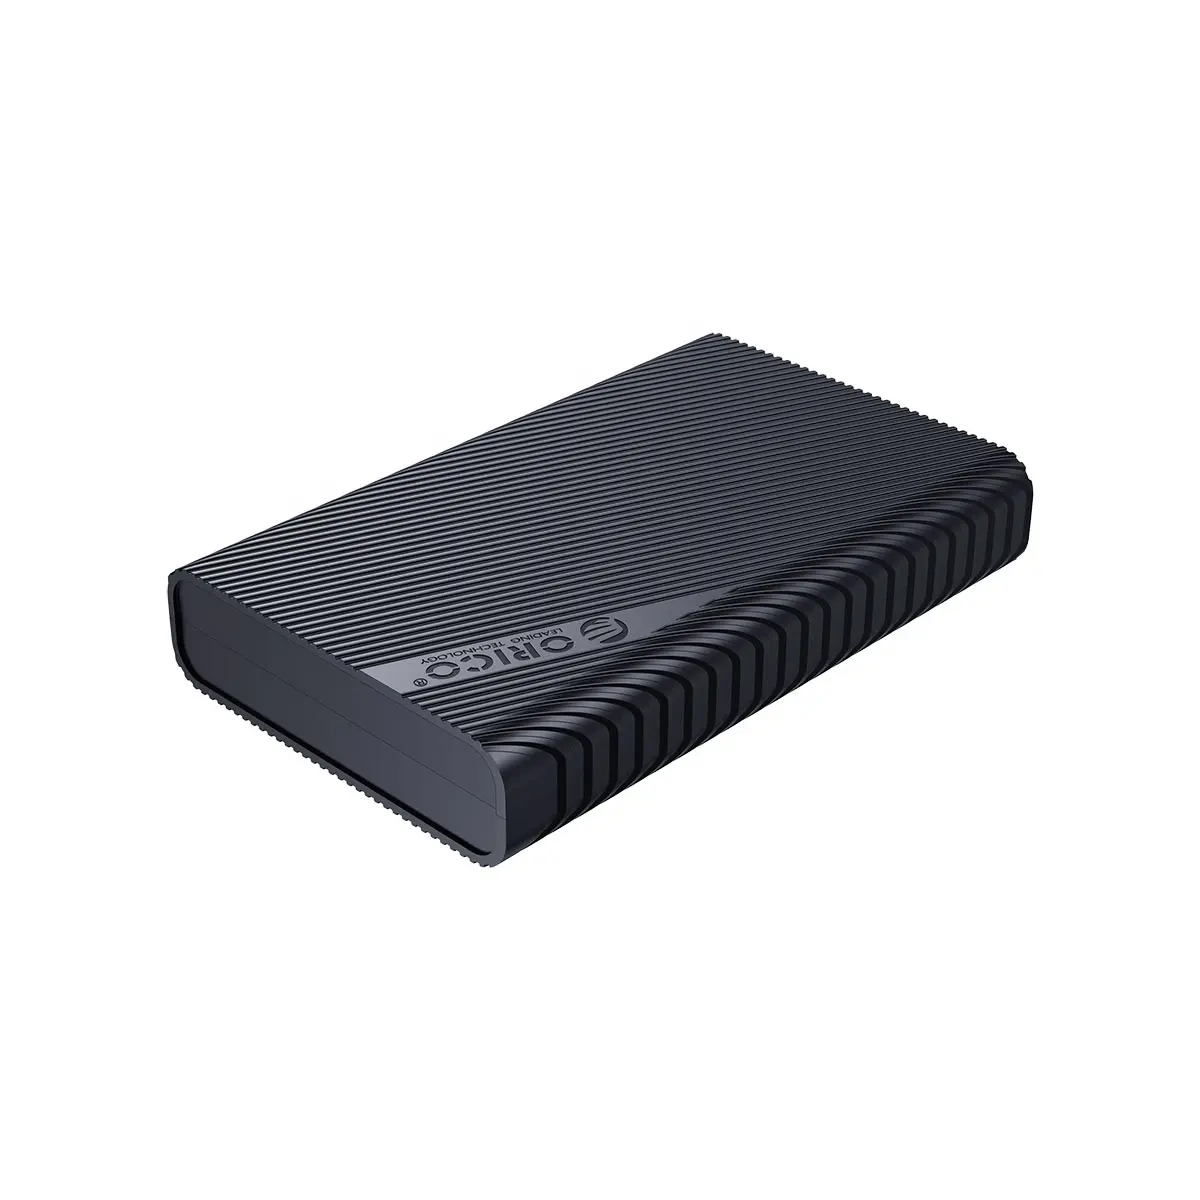 ORICO UASP Protocol 18TB Huge Storage 3.5 Inch External Desktop Hard Drive Enclosure HDD Case With 12V Power Adapter 3521U3